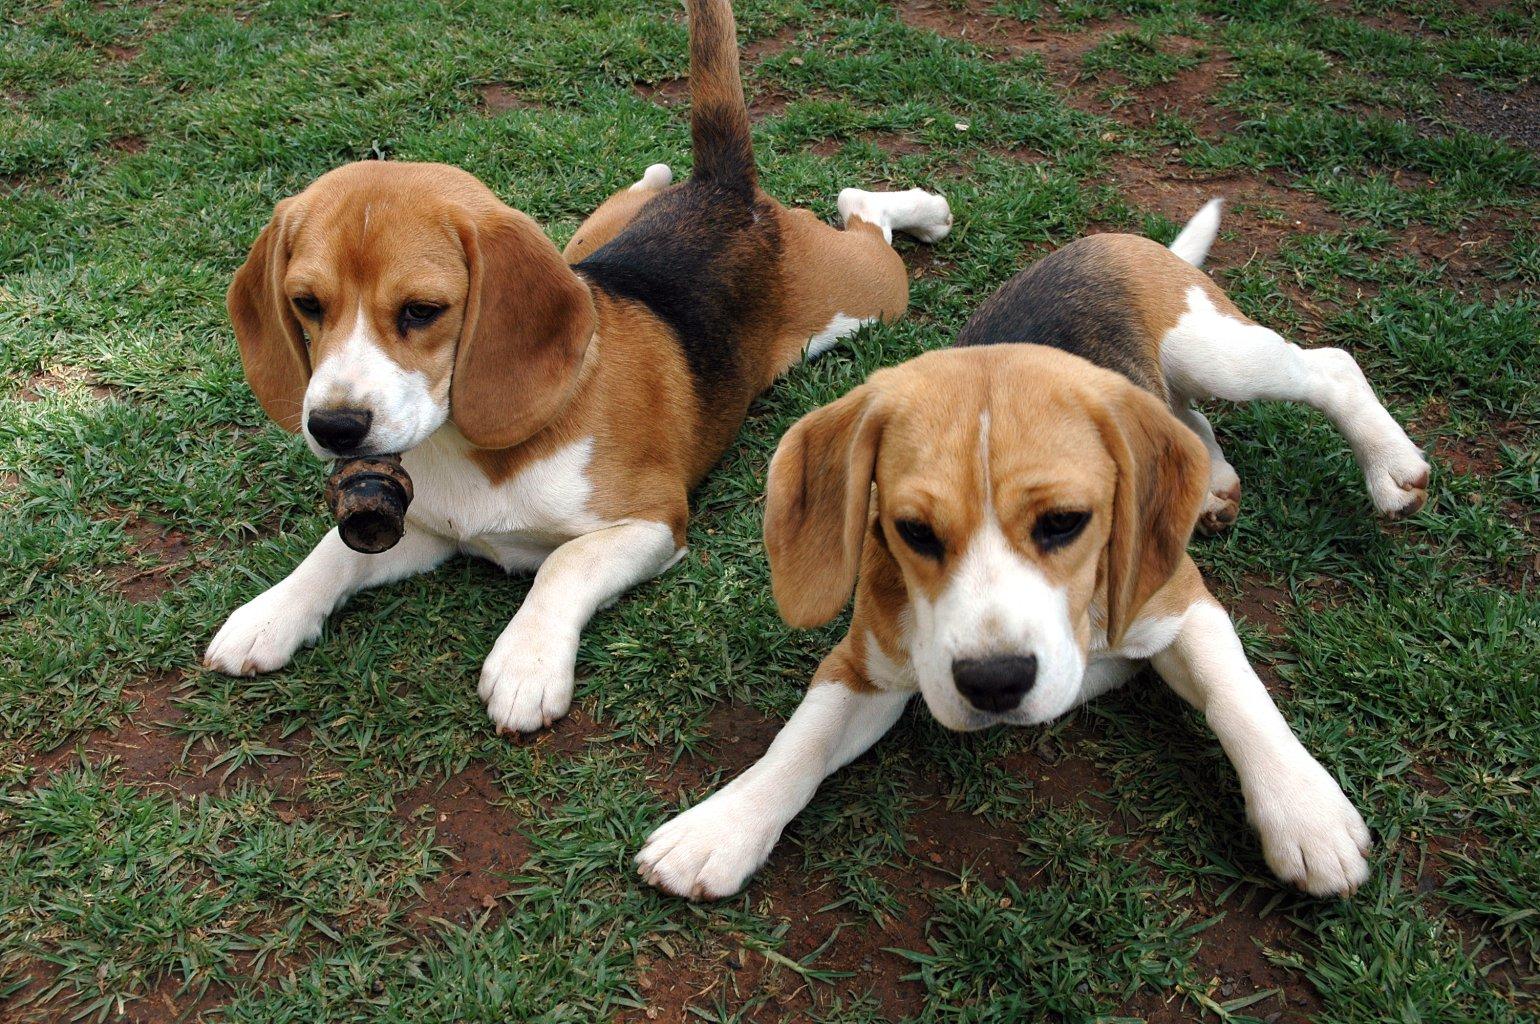 Beagle Dogs Wallpaper